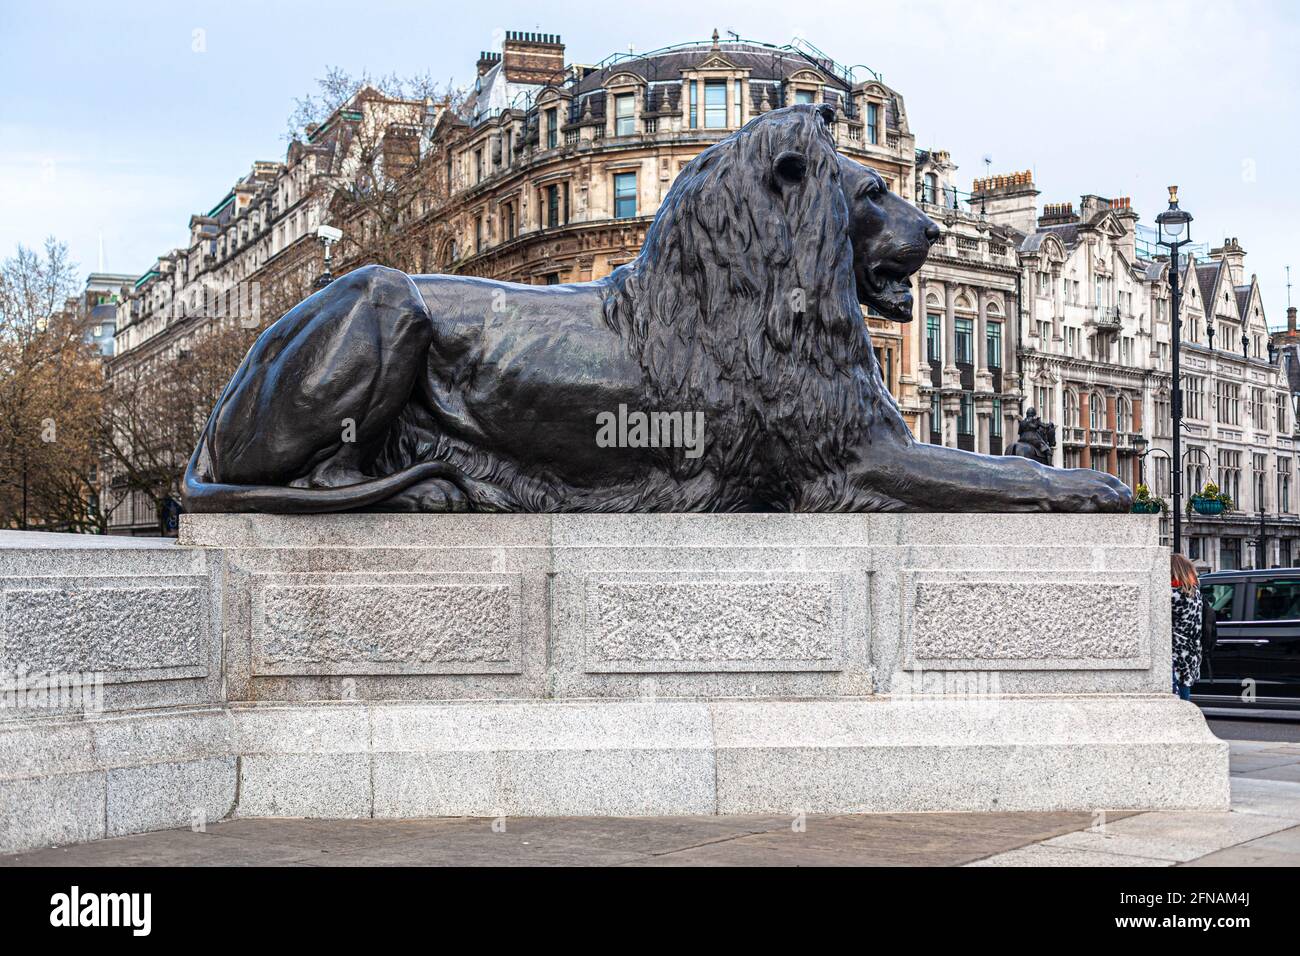 One of the four lion statues at Trafalgar Square guarding Nelson's Column at Trafalgar Square, London, England, UK. Stock Photo